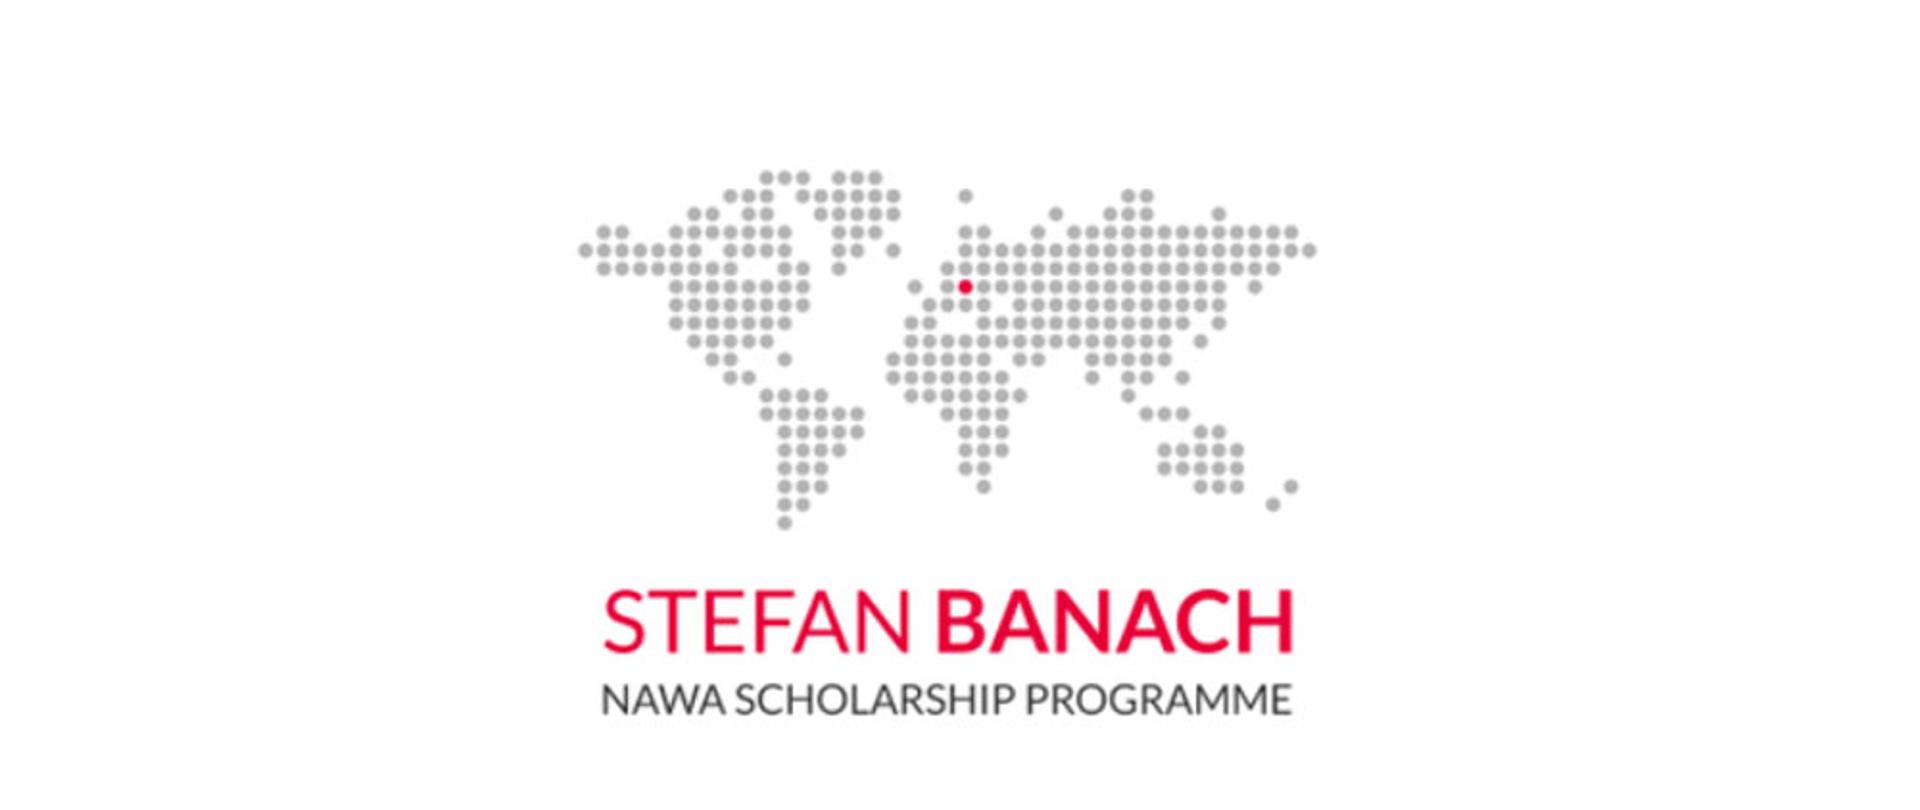 Banach Scholarship Programme